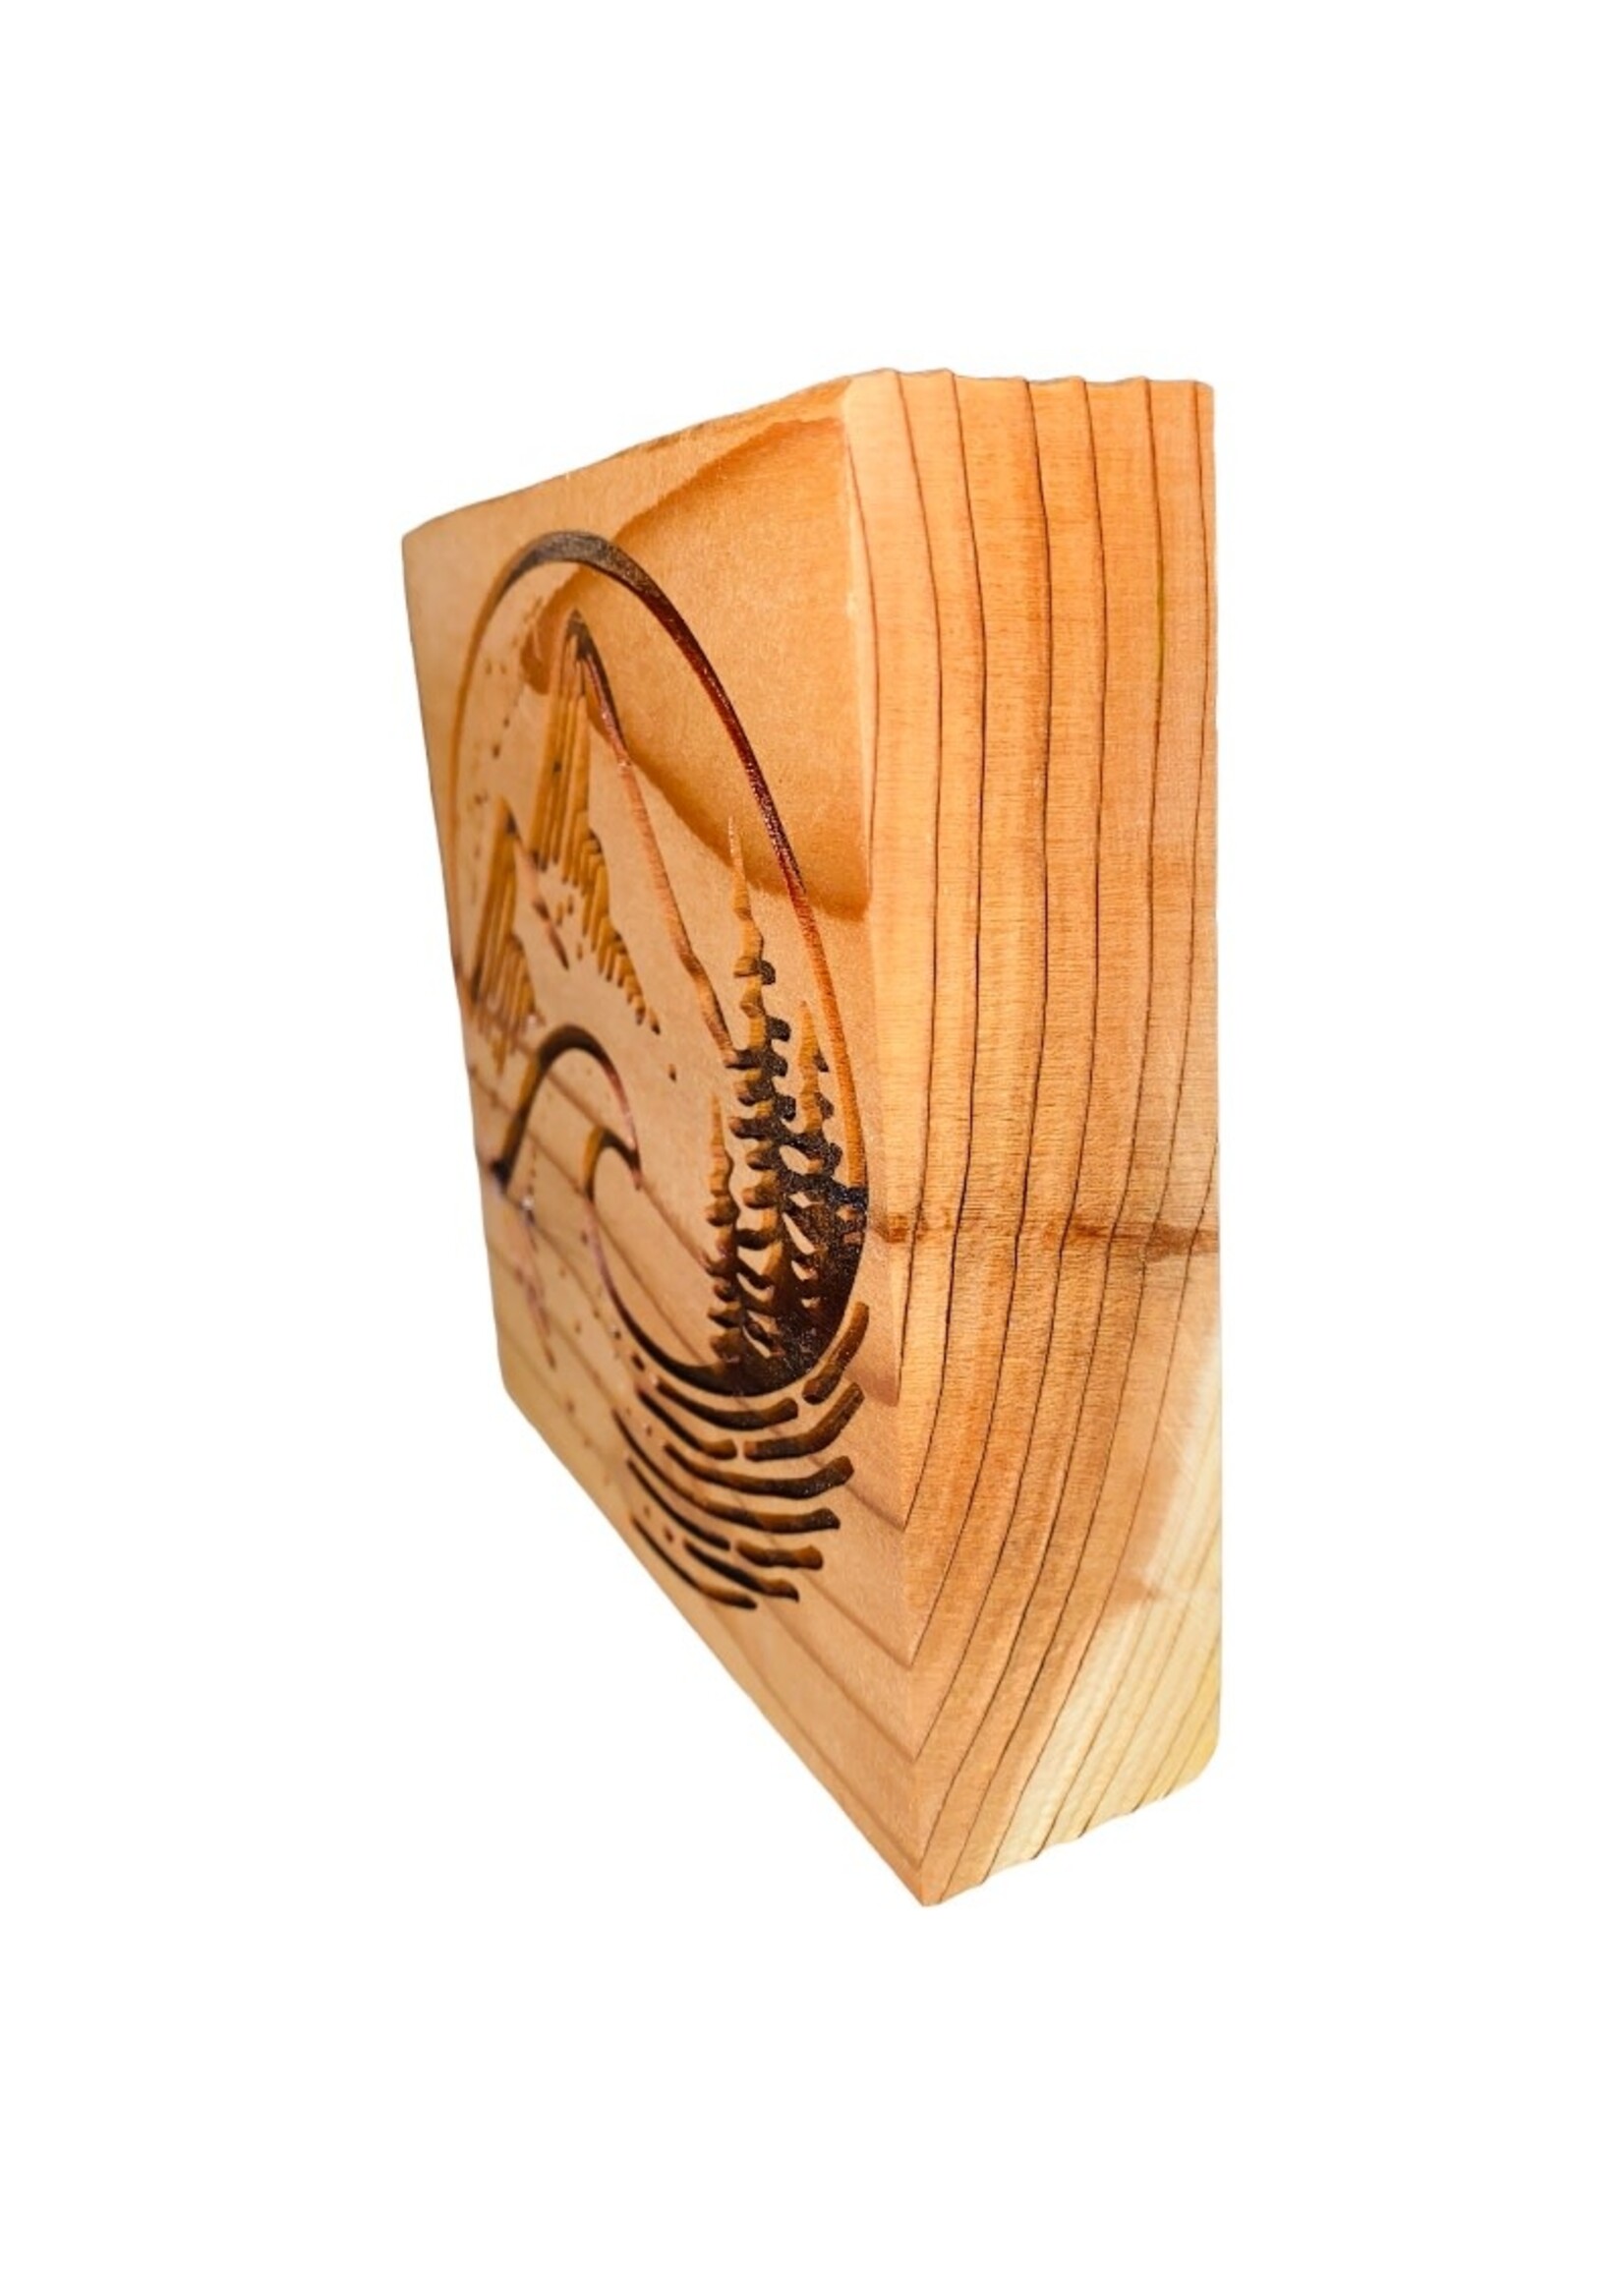 Grandfather Tree Redwood Shelf Sitter - Lost Coast 5.5”